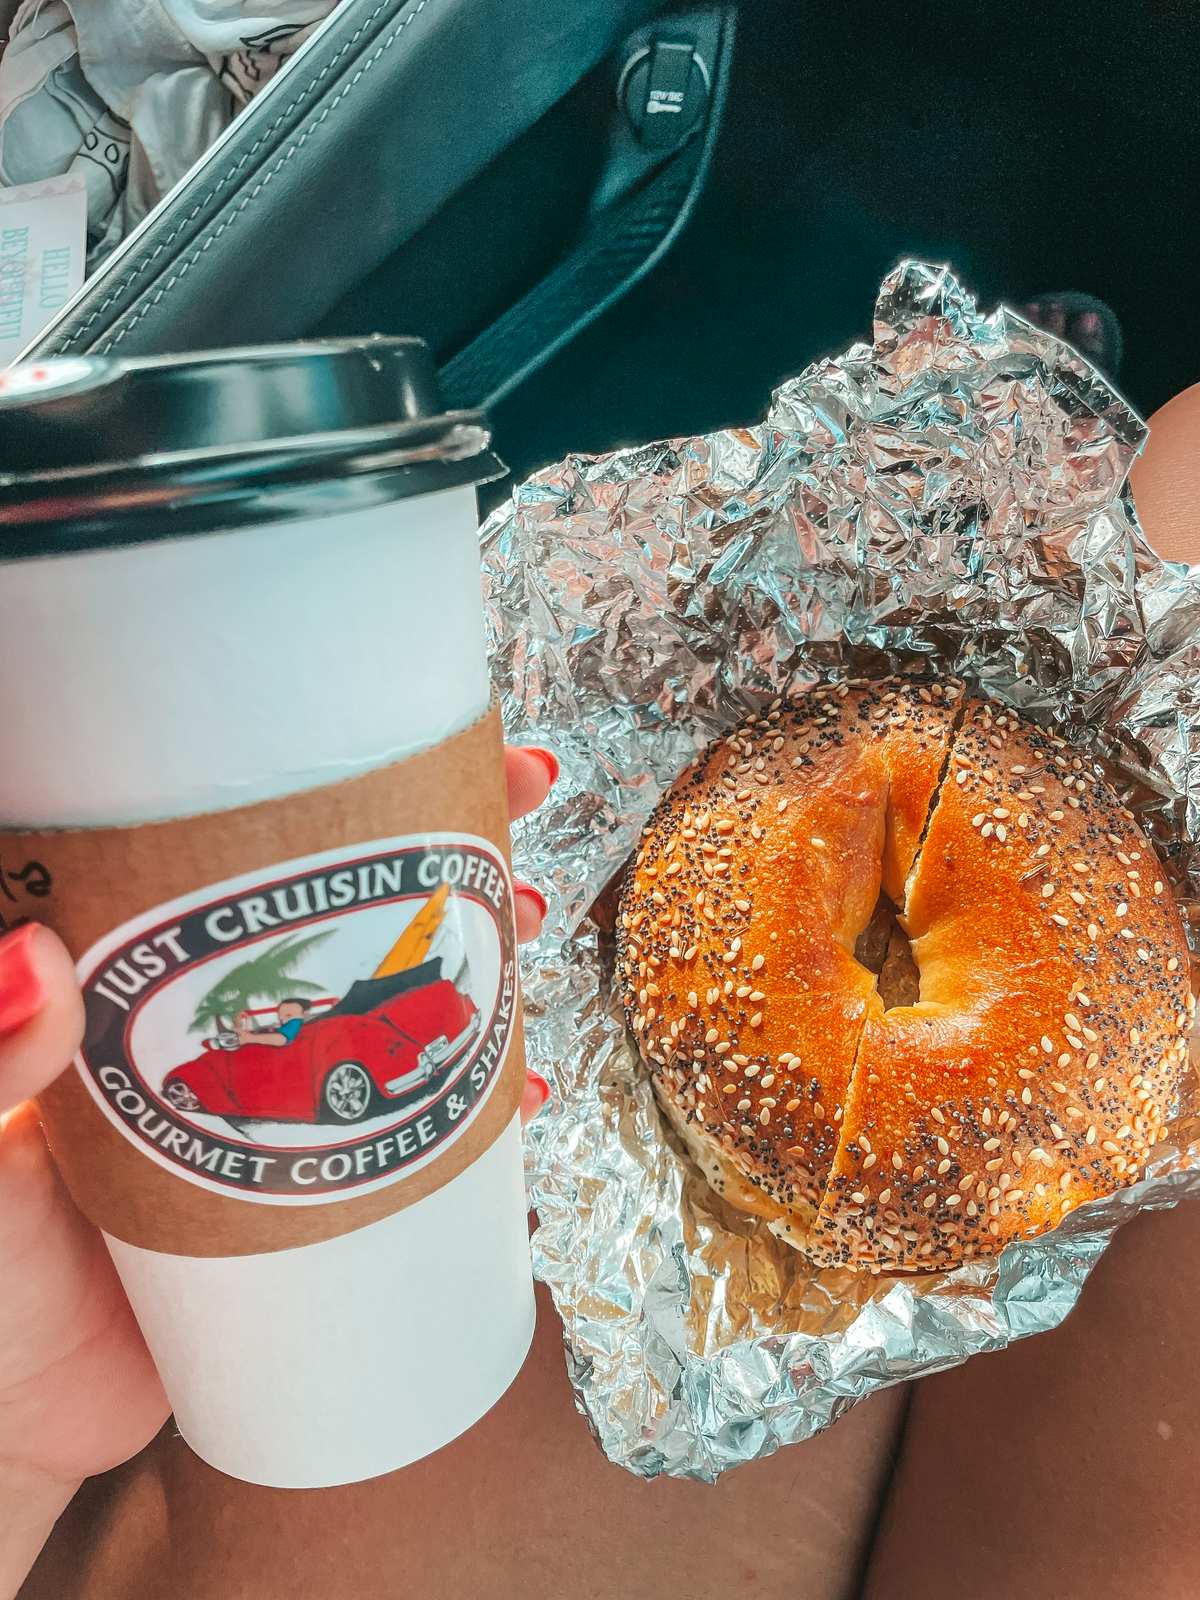 Just Cruisin Coffee and breakfast sandwich